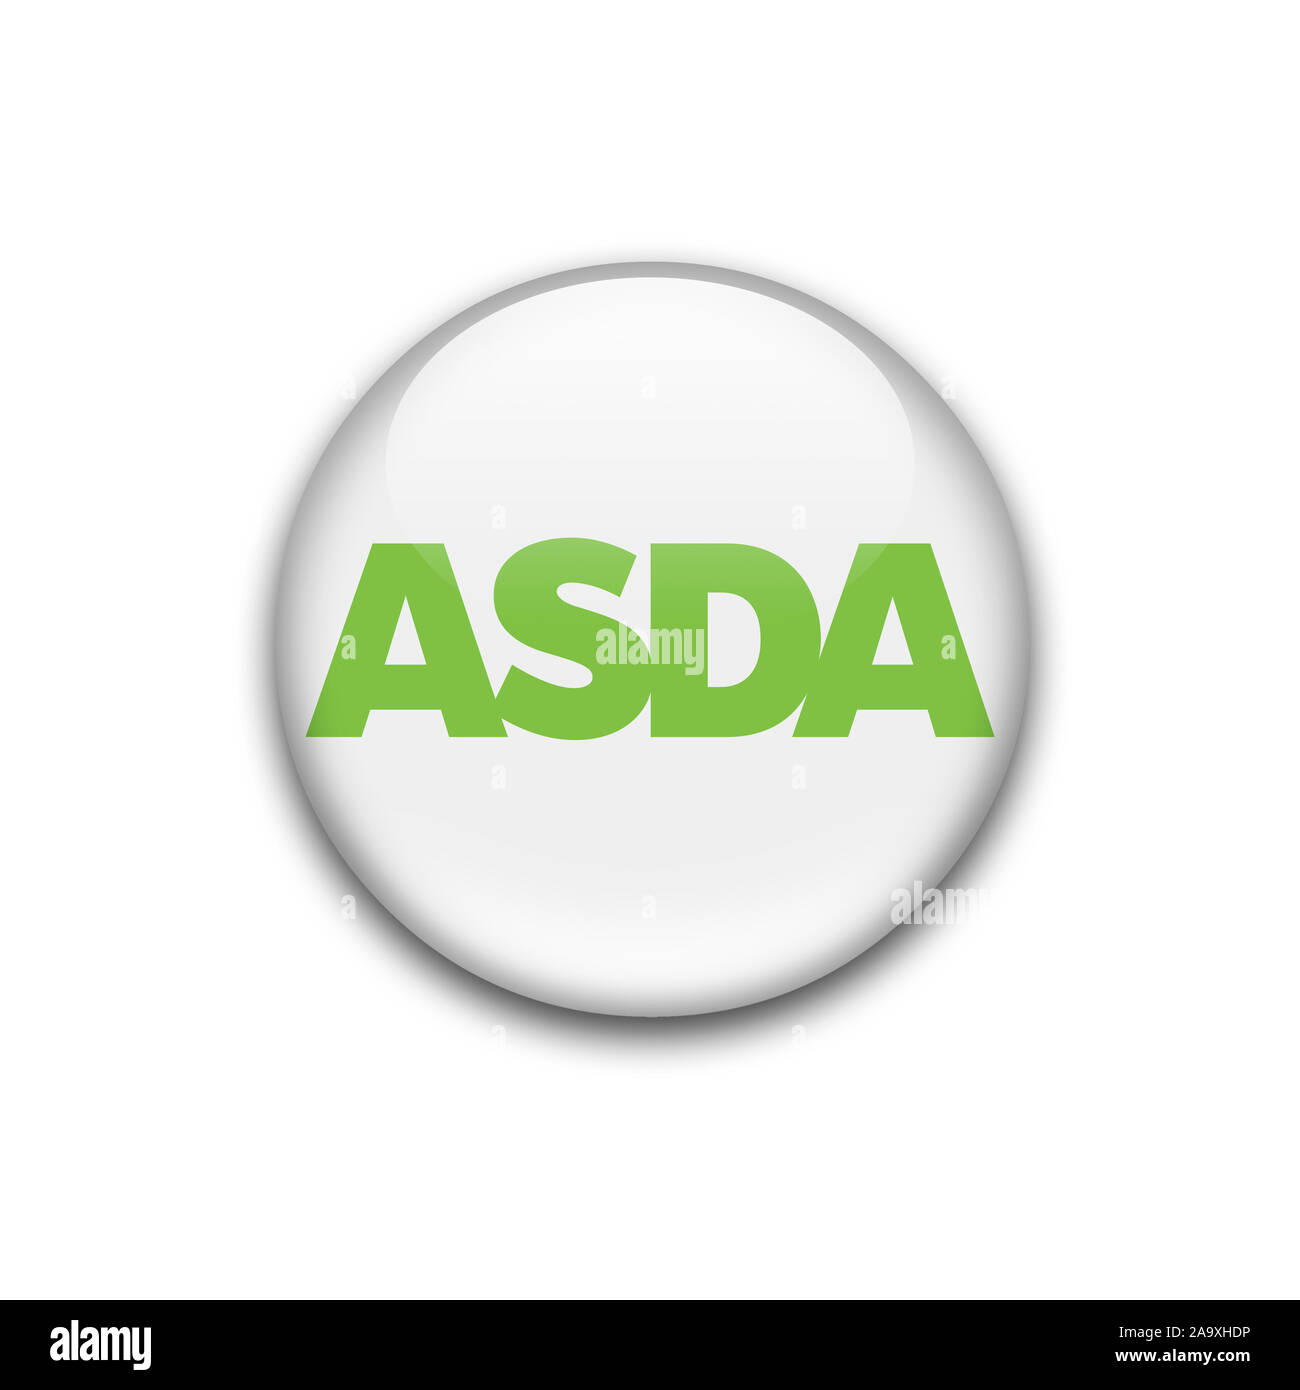 Asda logo hi-res stock photography and images - Alamy